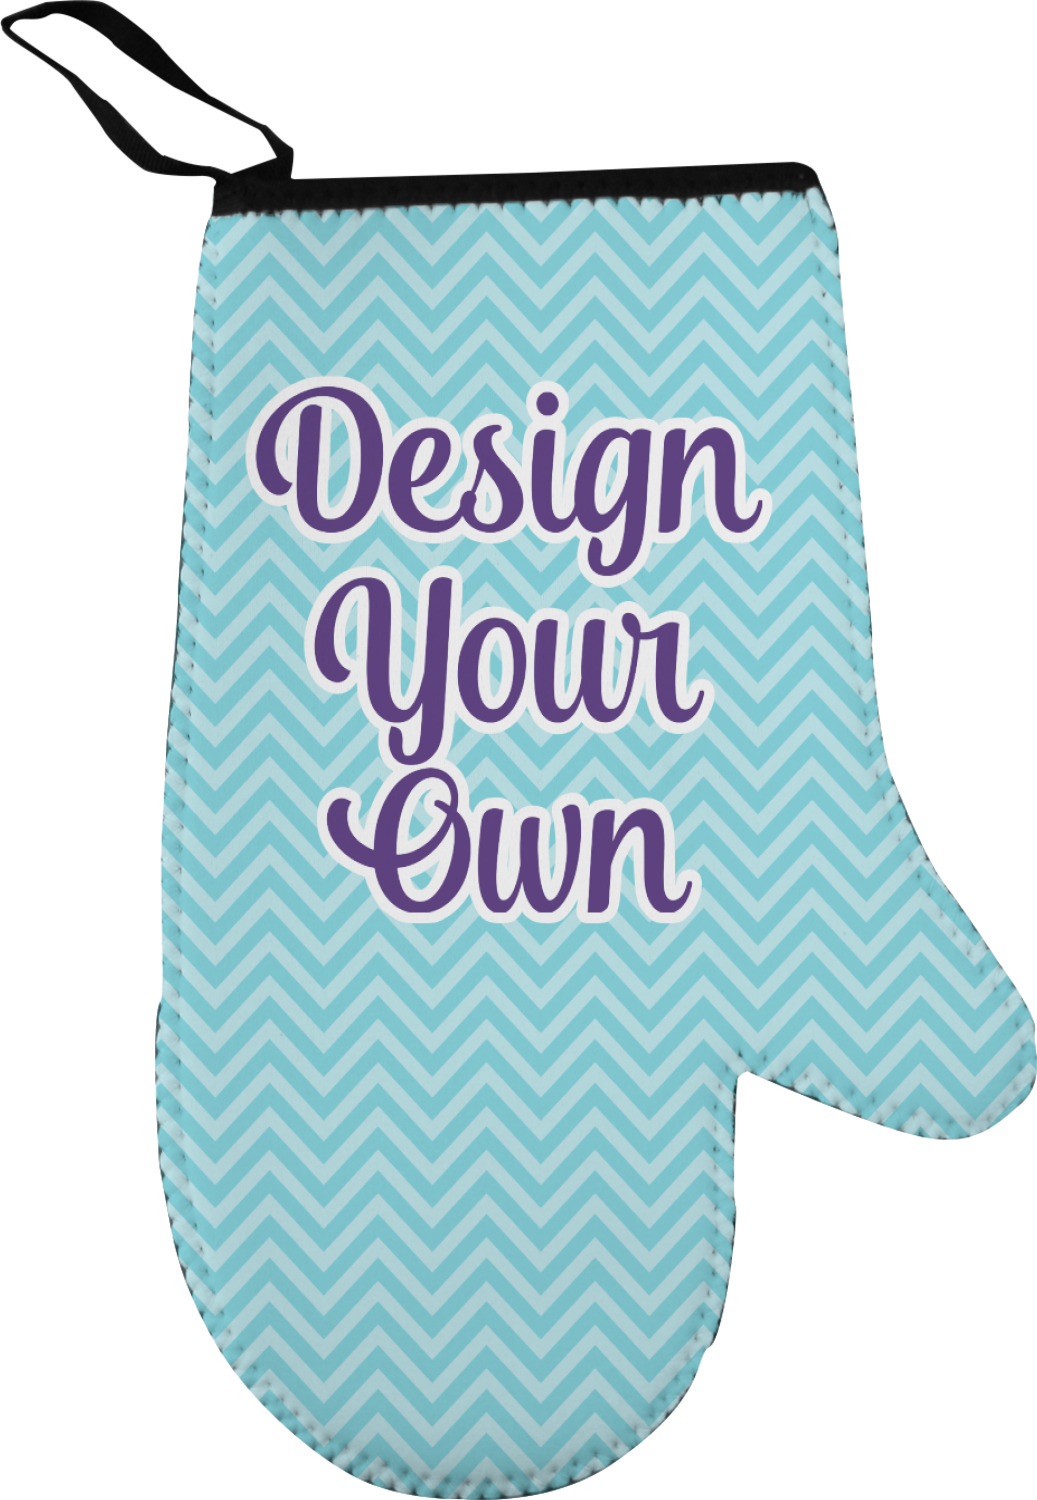 Personalized Oven Mitts/ Towel set - Home Decor - CDJ Designs, E-Commerce  Personalization Boutique Shop